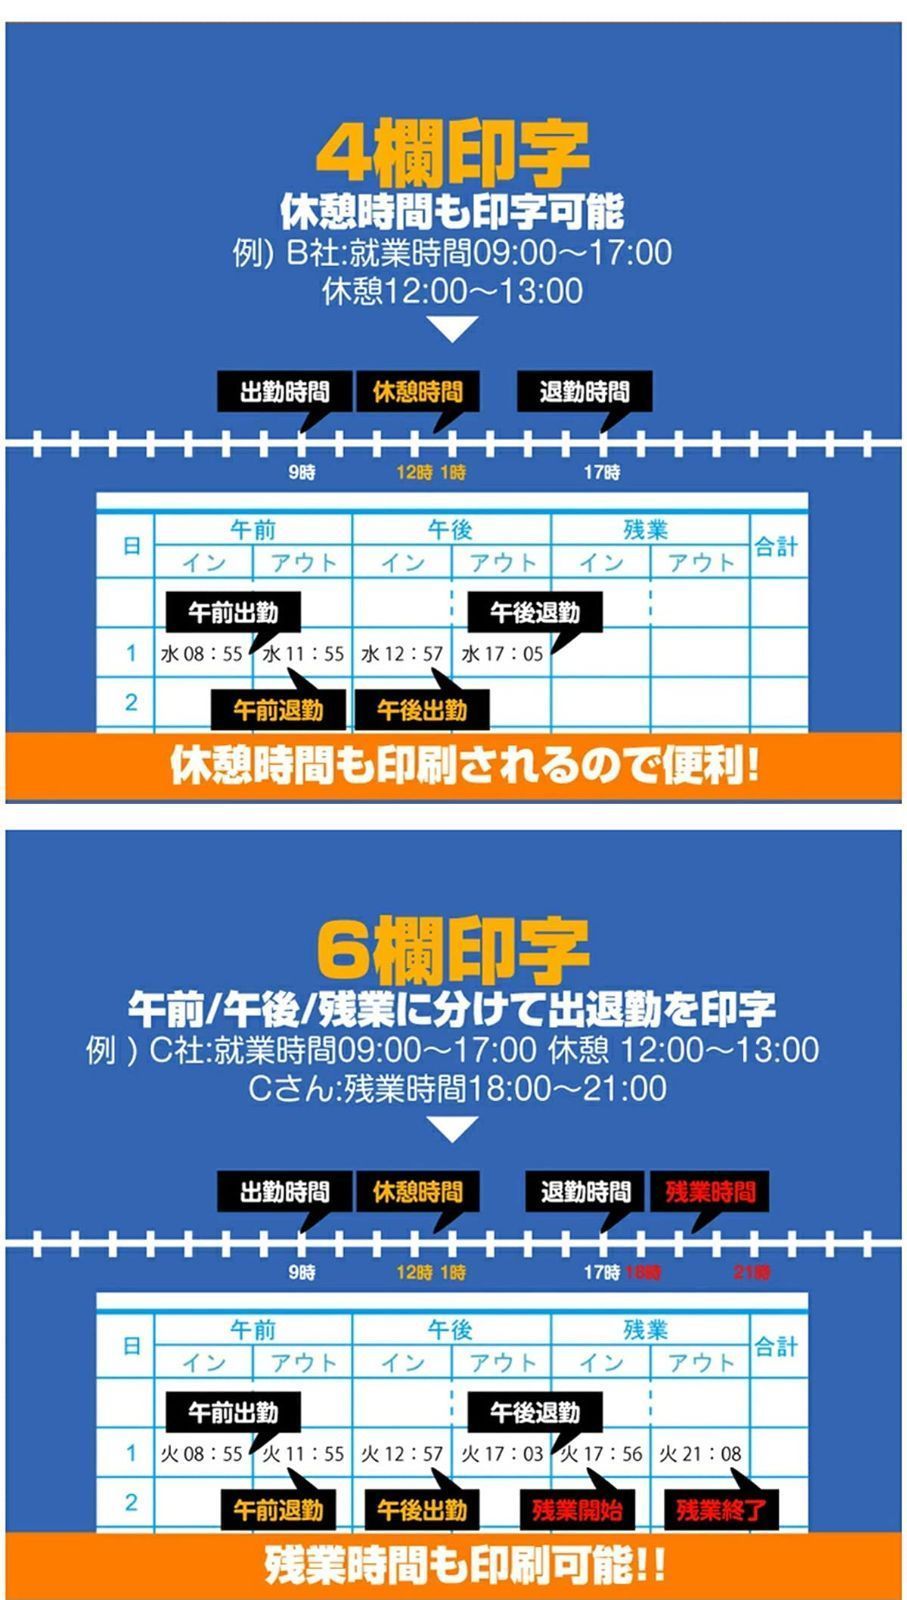 TOKAIZ タイムレコーダー 本体 6欄印字可能 両面印字モデル タイムカード５０枚付き TR-001s - 4